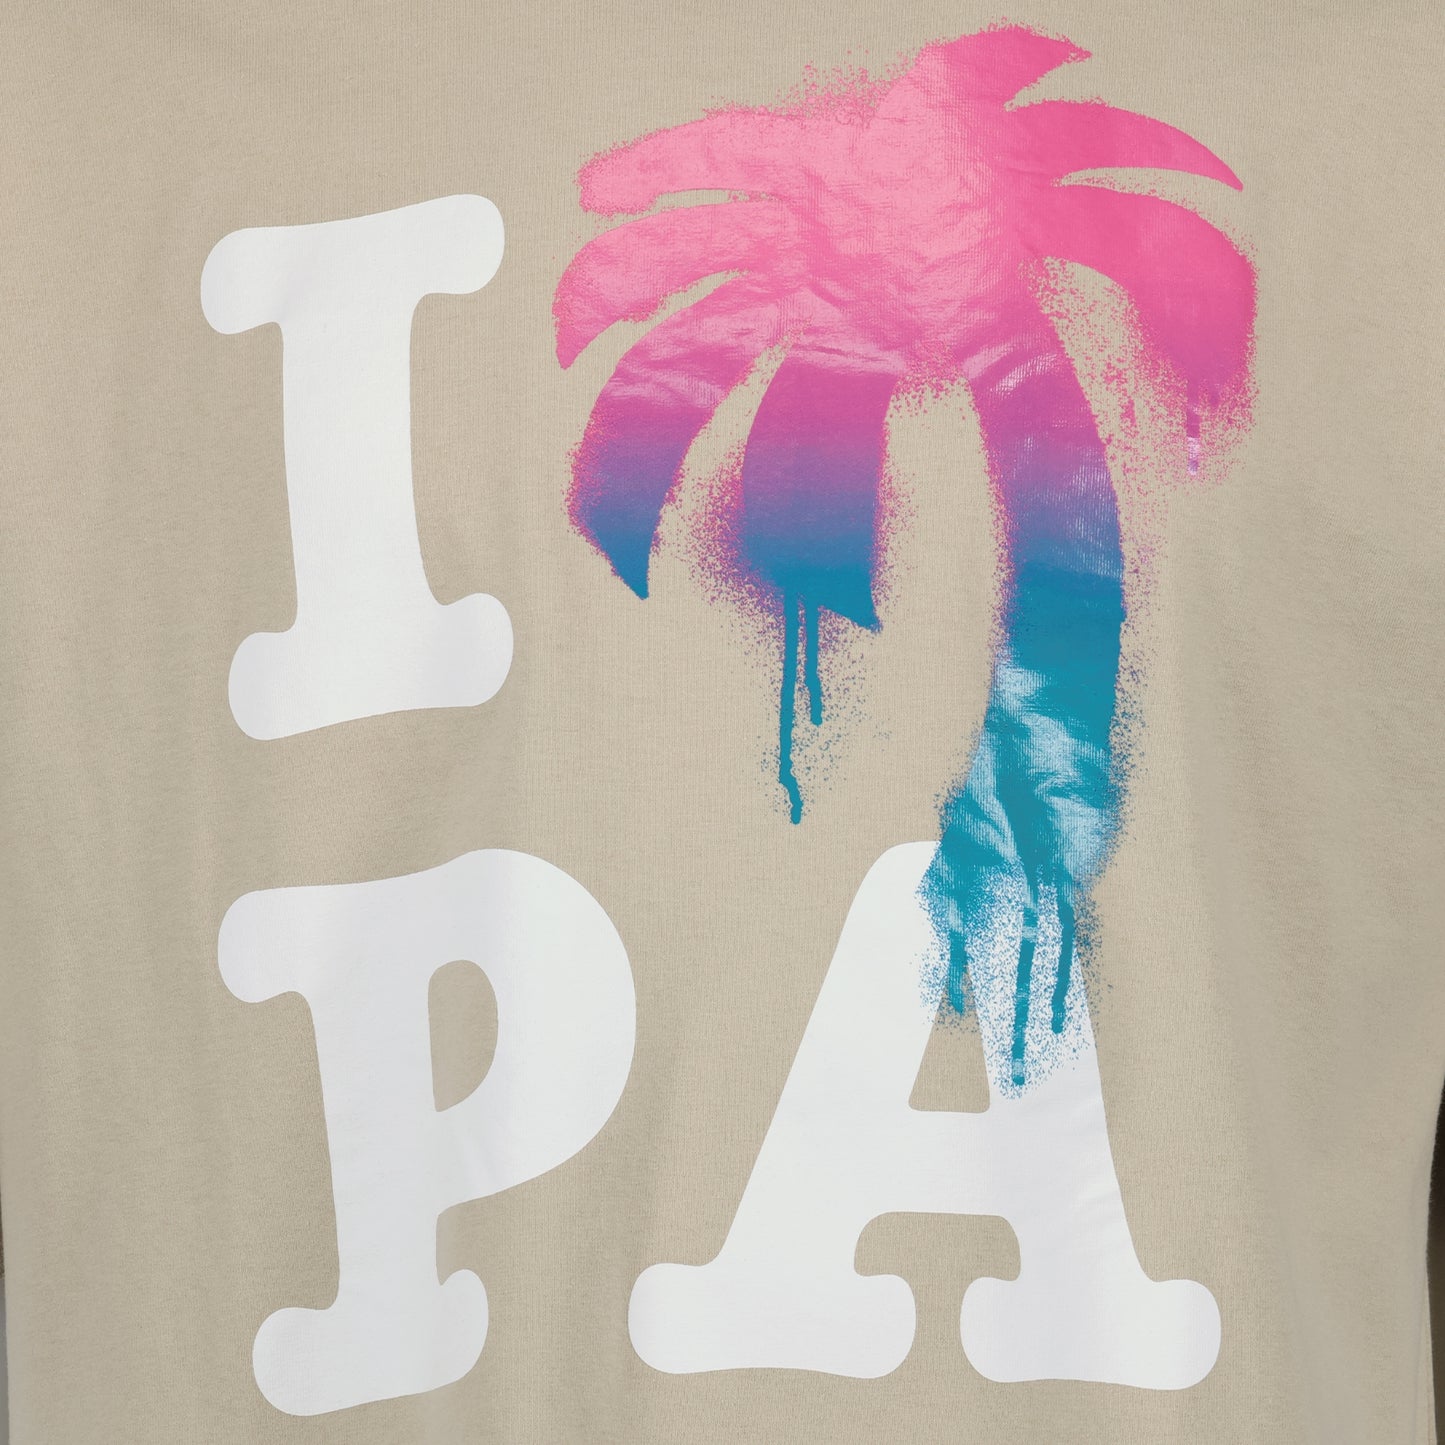 T-shirt I love PA